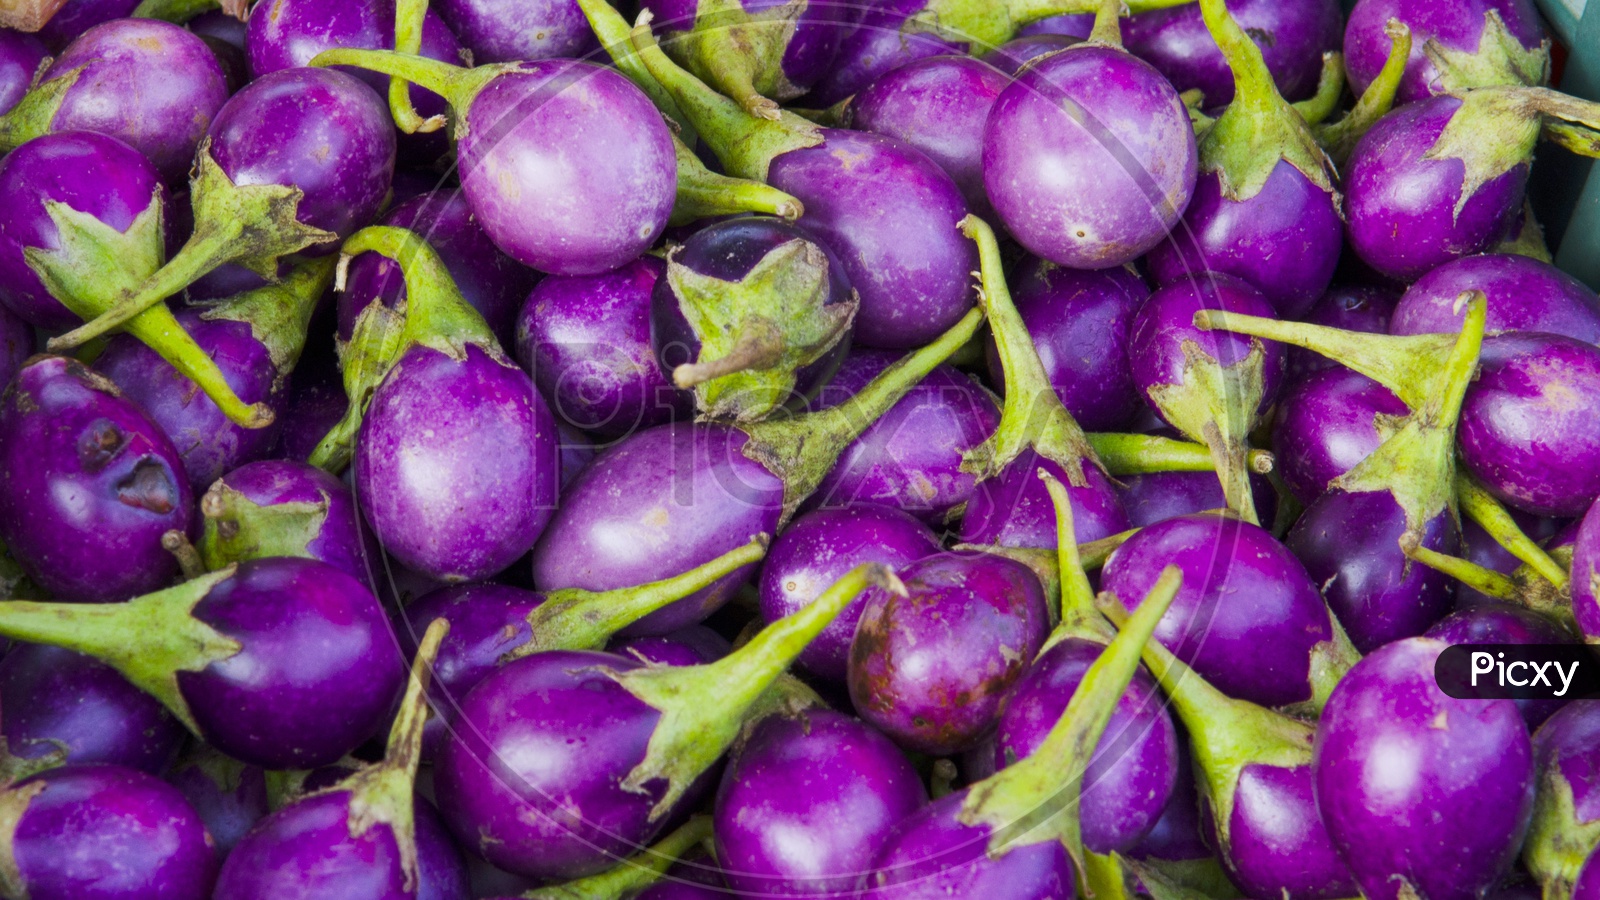 Eggplant or Brinjal